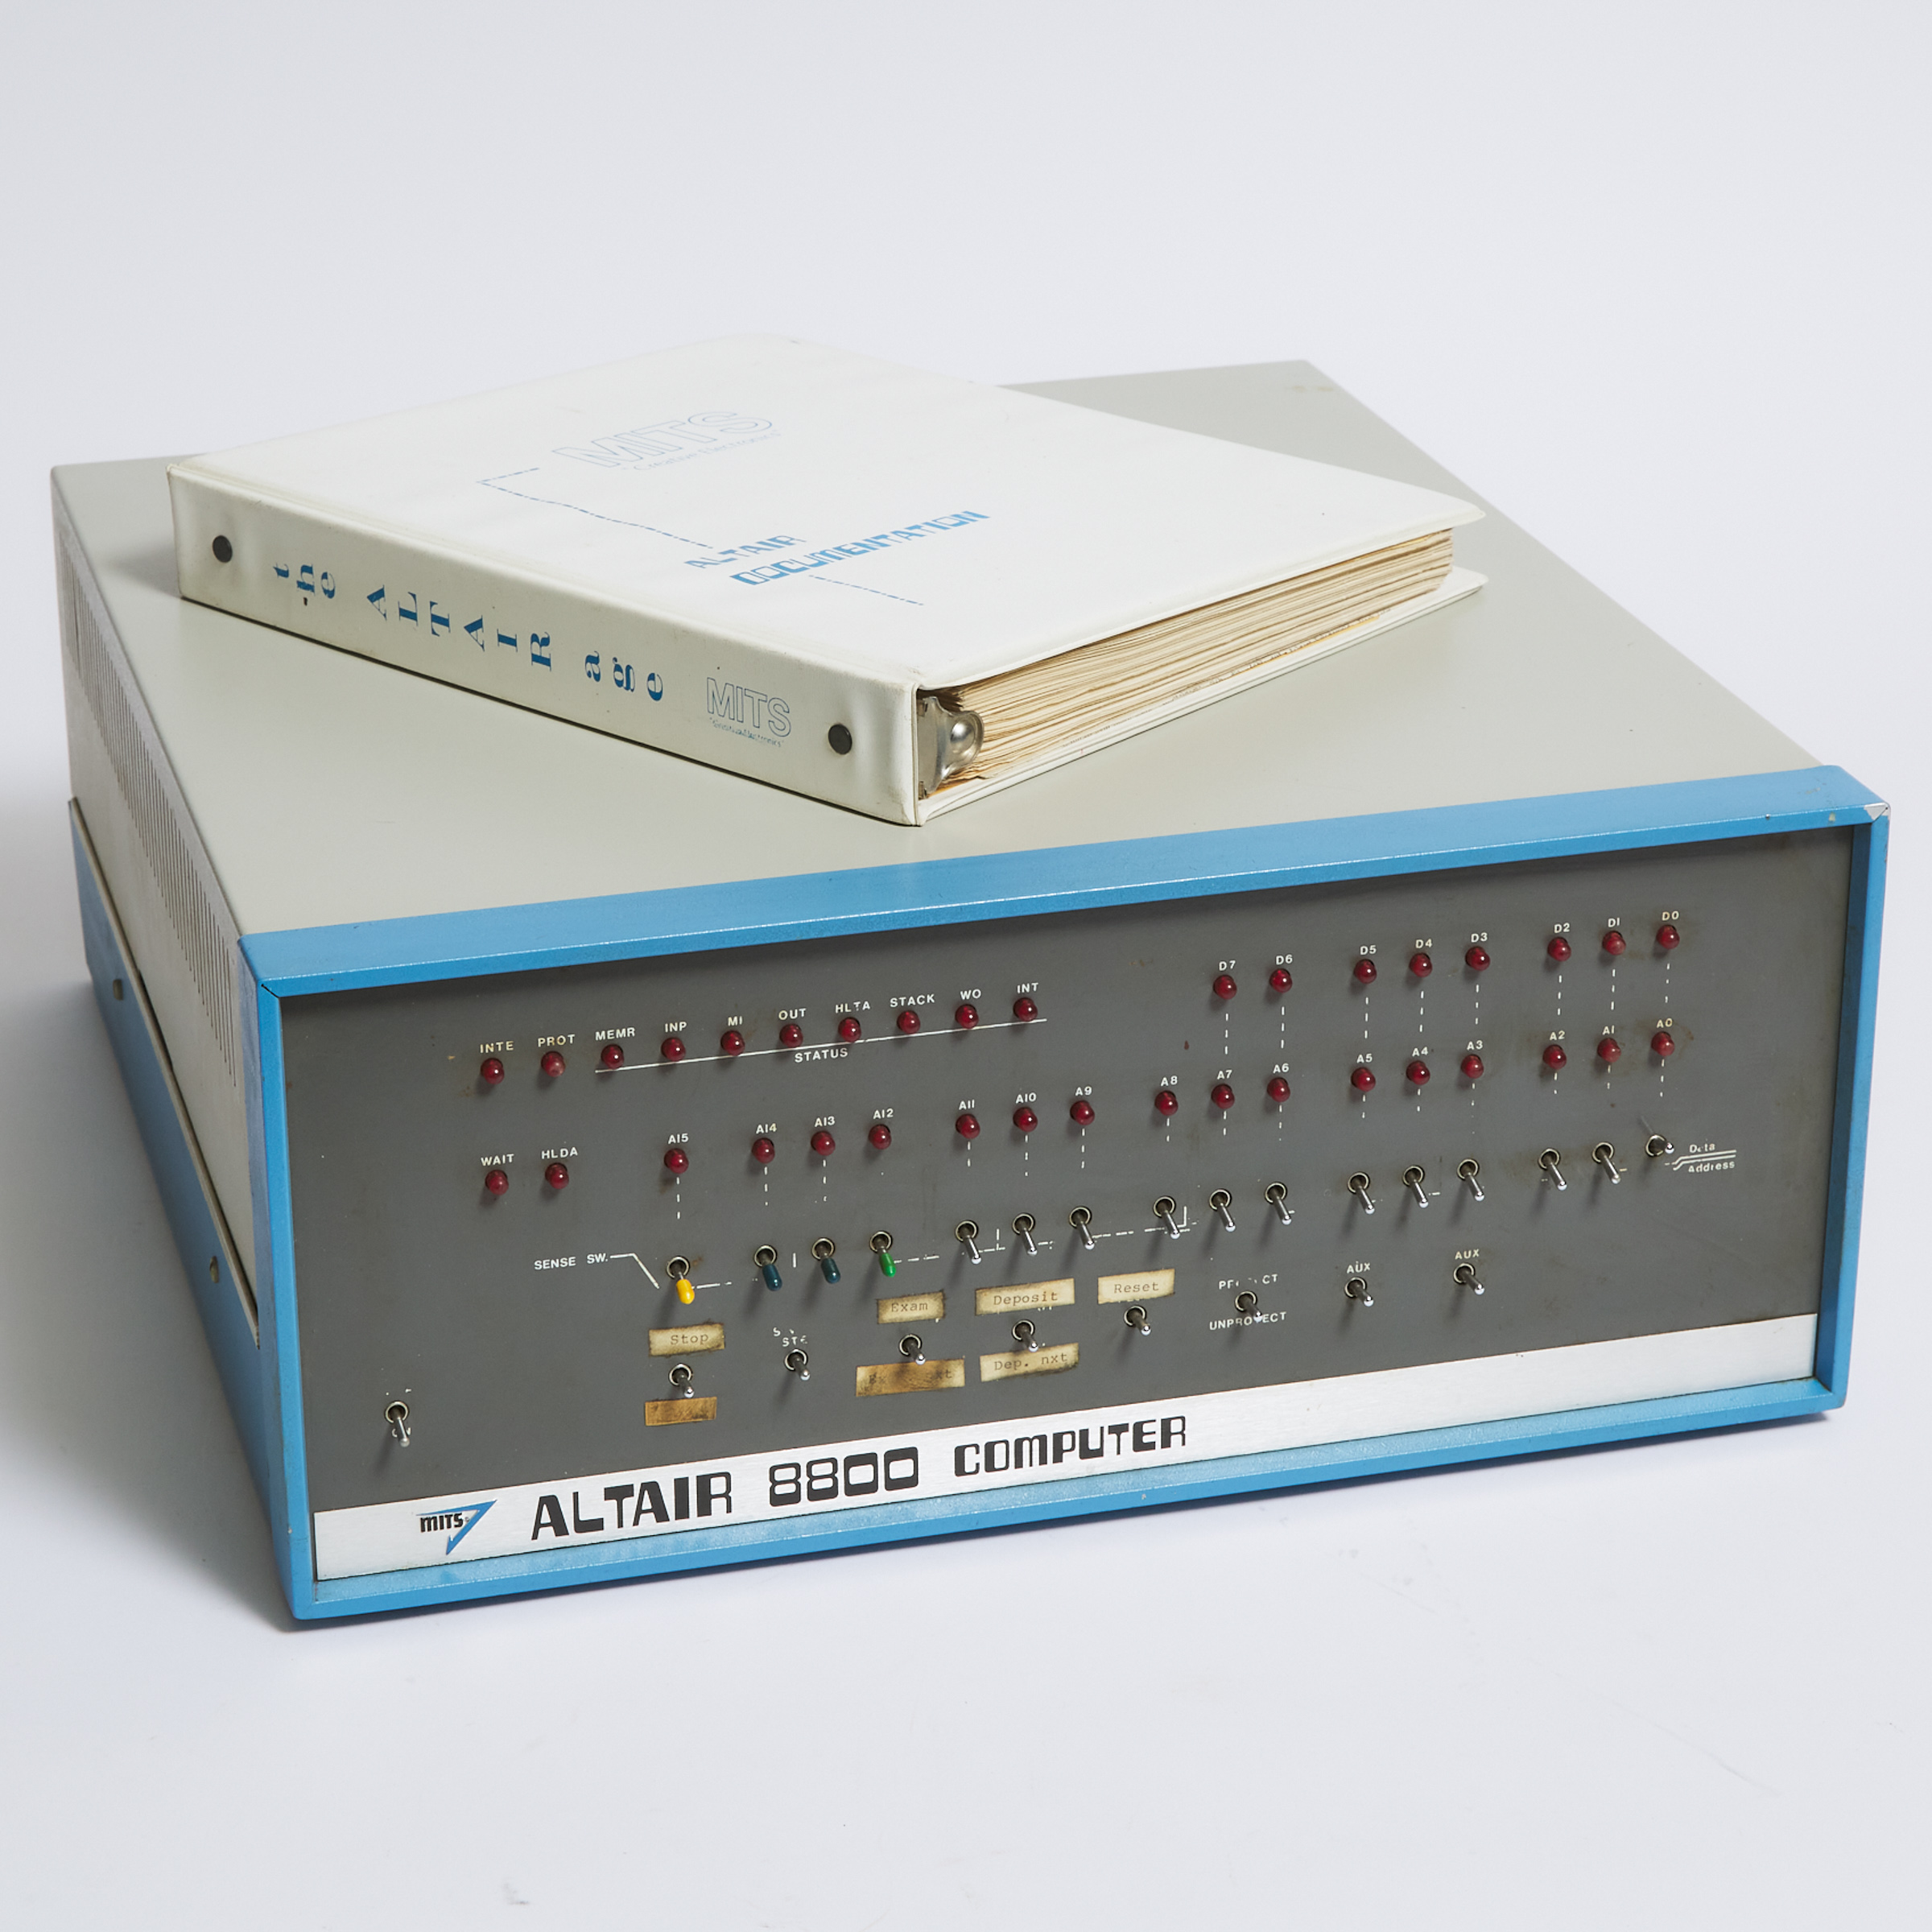 MITS Altair 8800 8-Bit Micro-Computer, c.1975